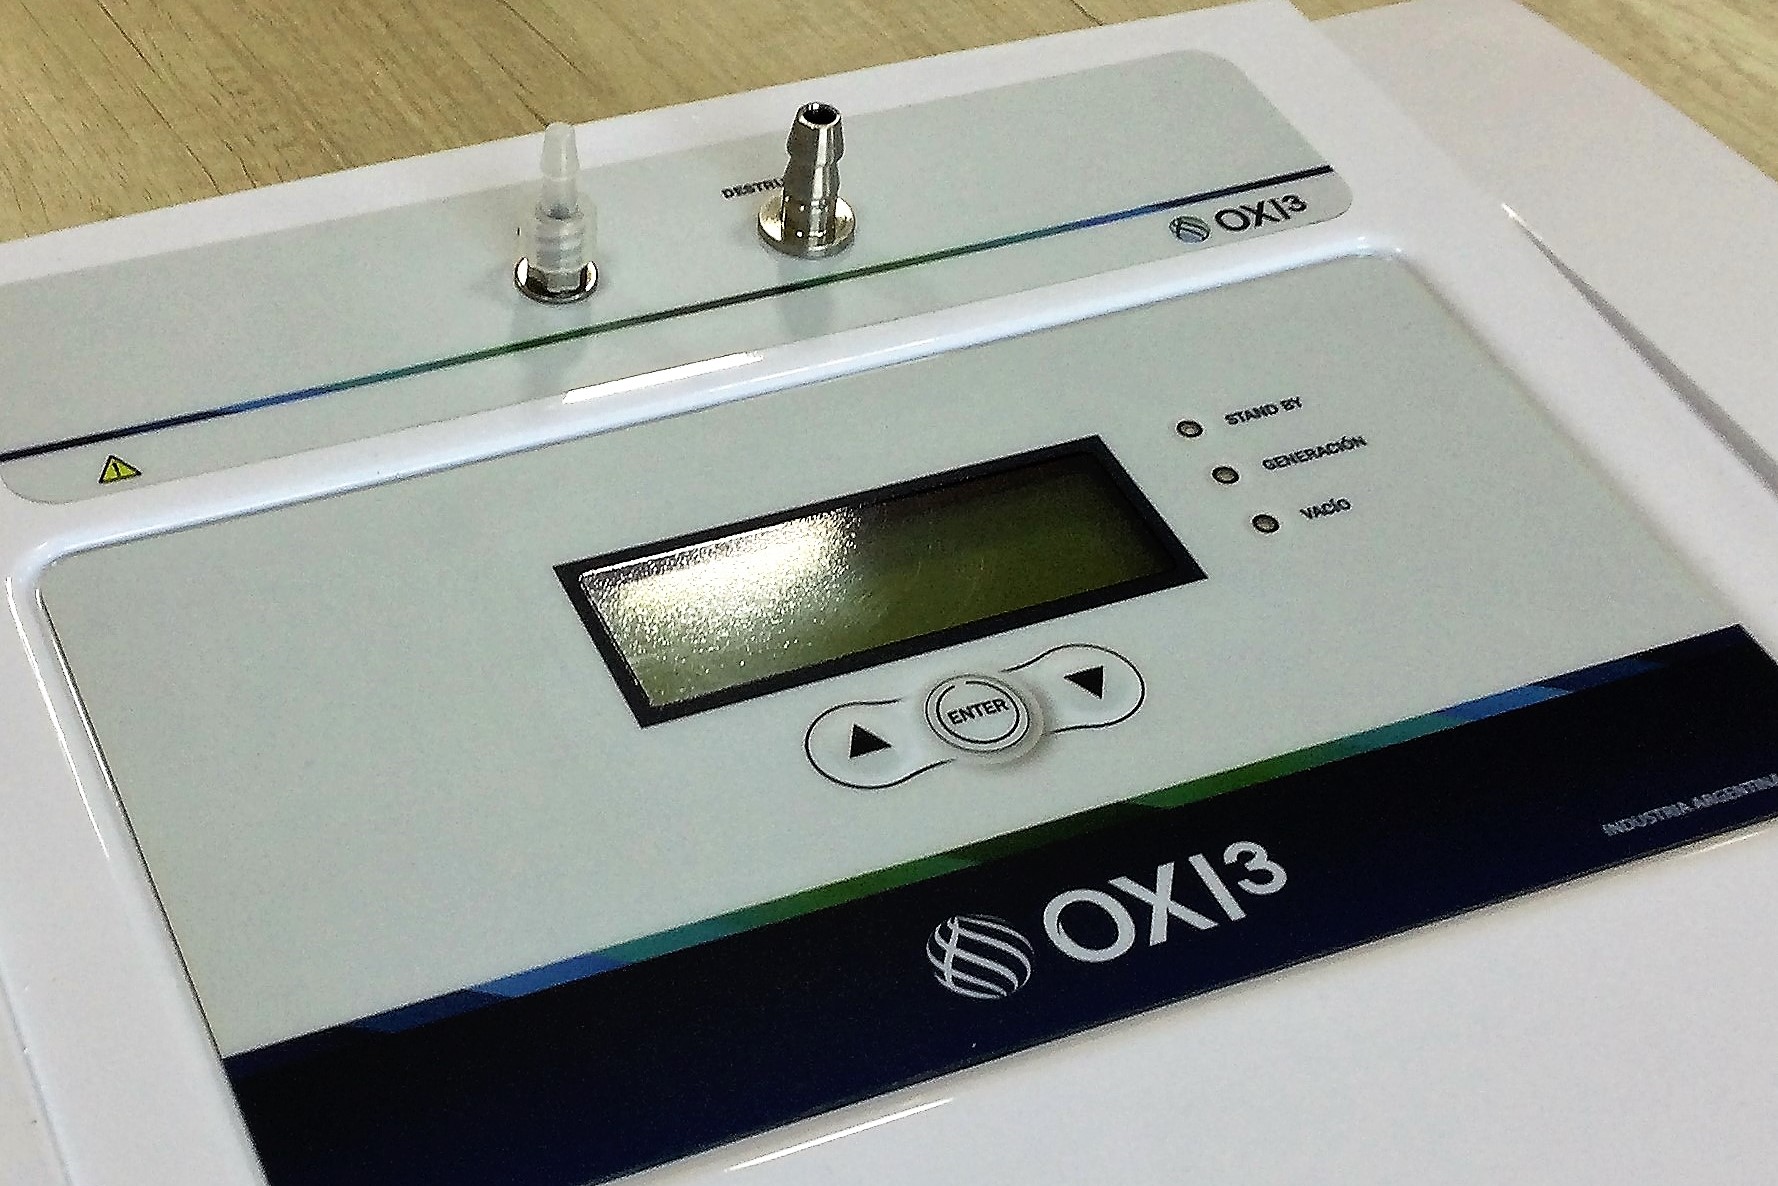 Odonto-40 - Generador de ozono uso odontológico 40 μg/ml – Bioaplicaciones